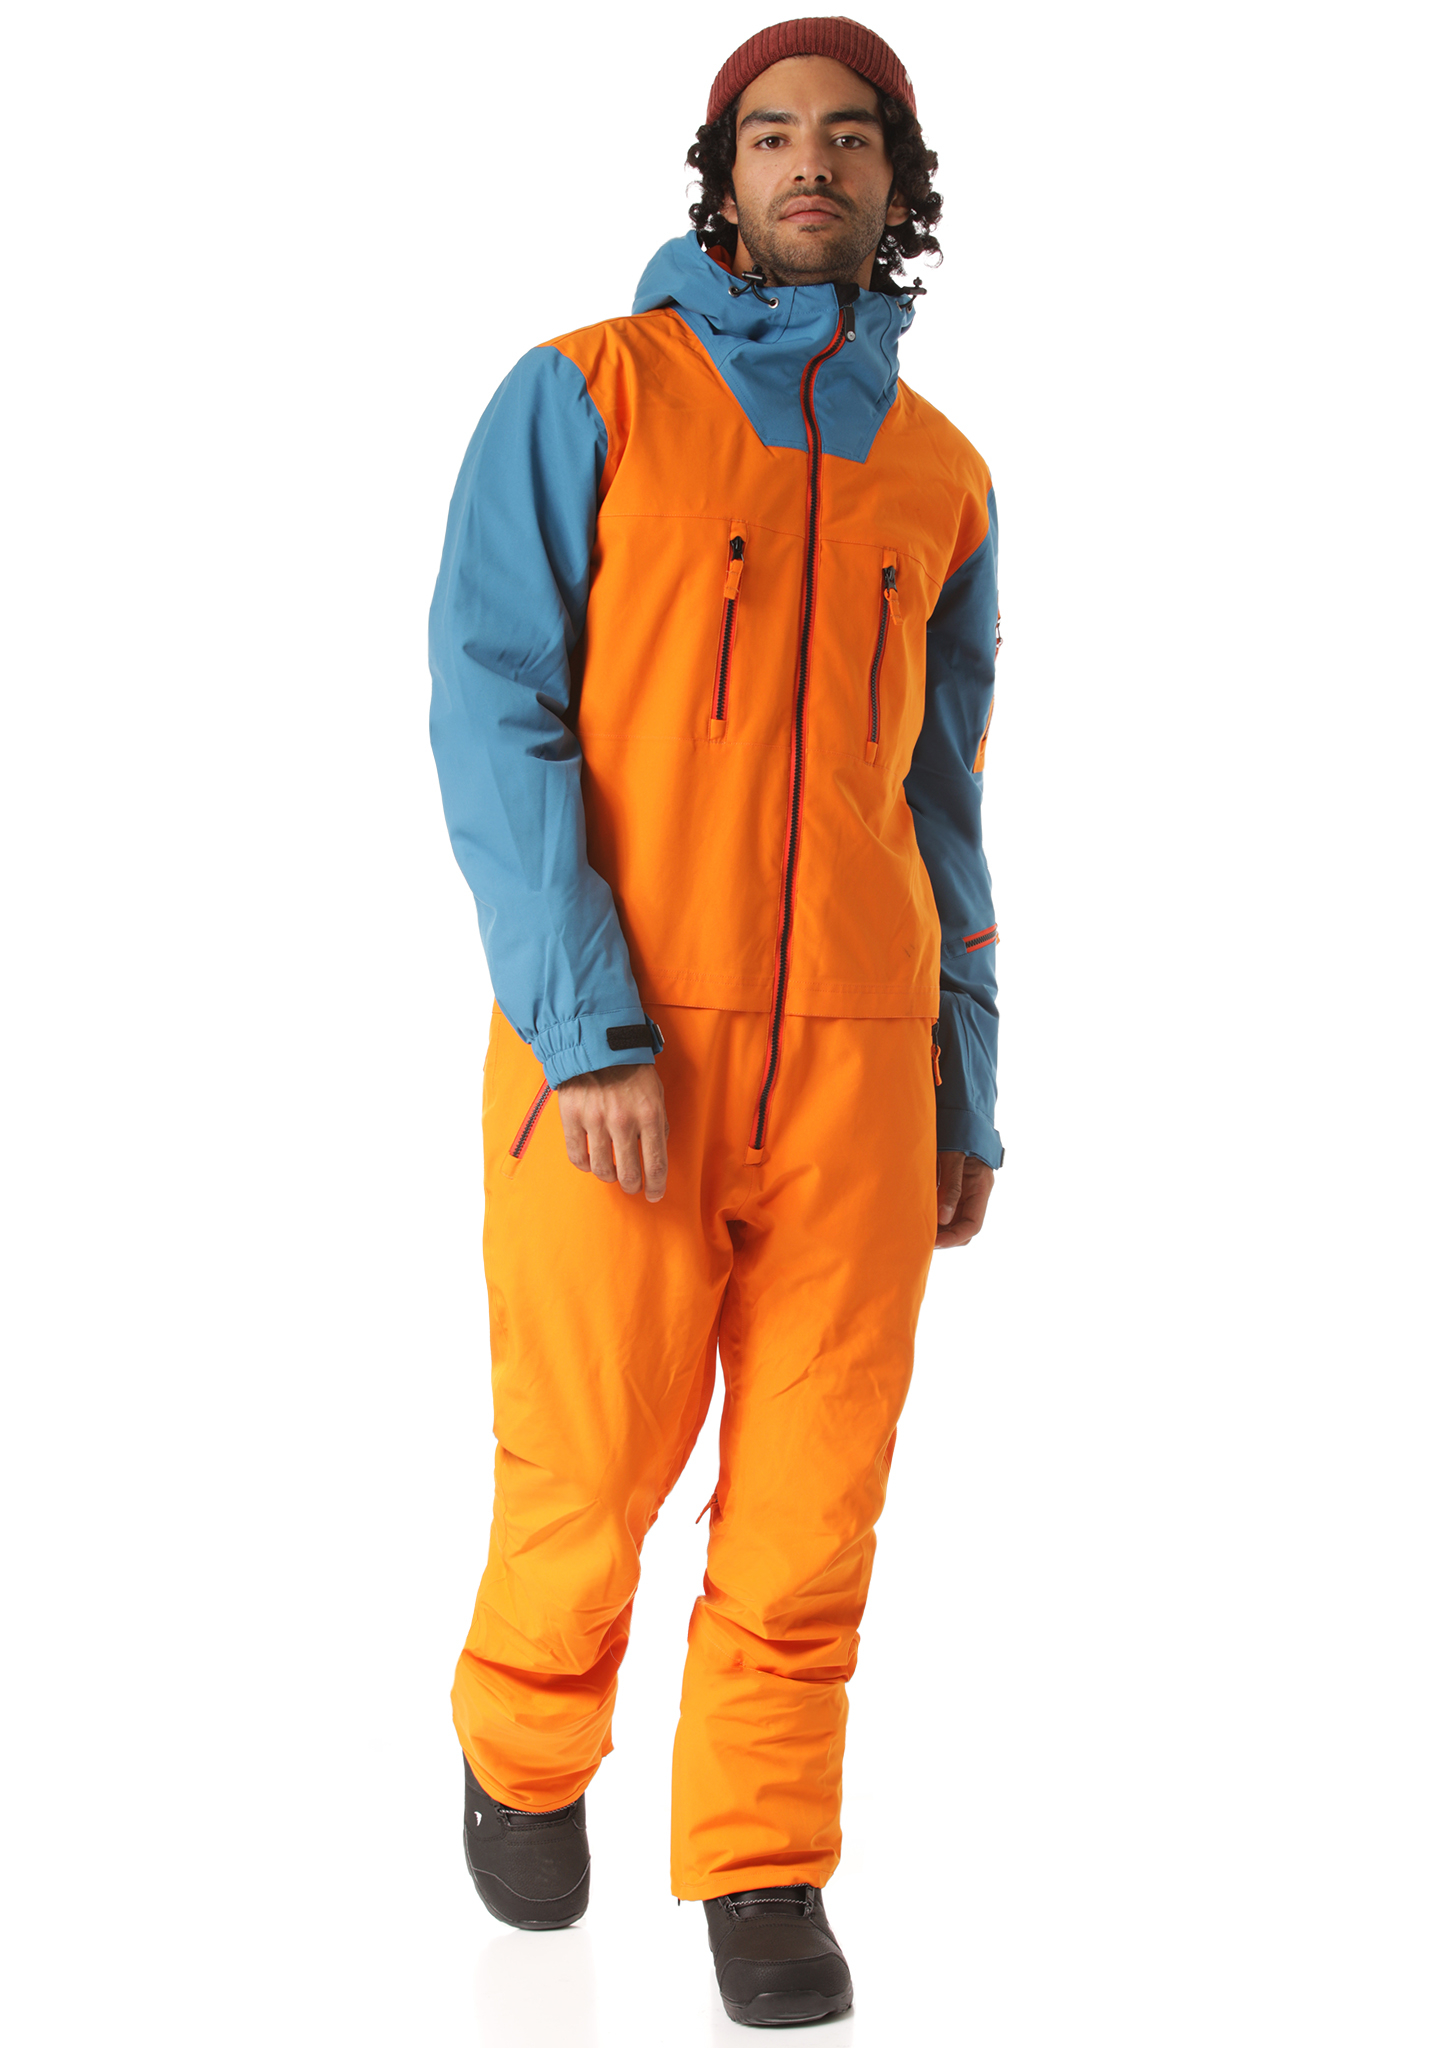 LIGHT Overall Dump Snowboardbekleidung orange XL